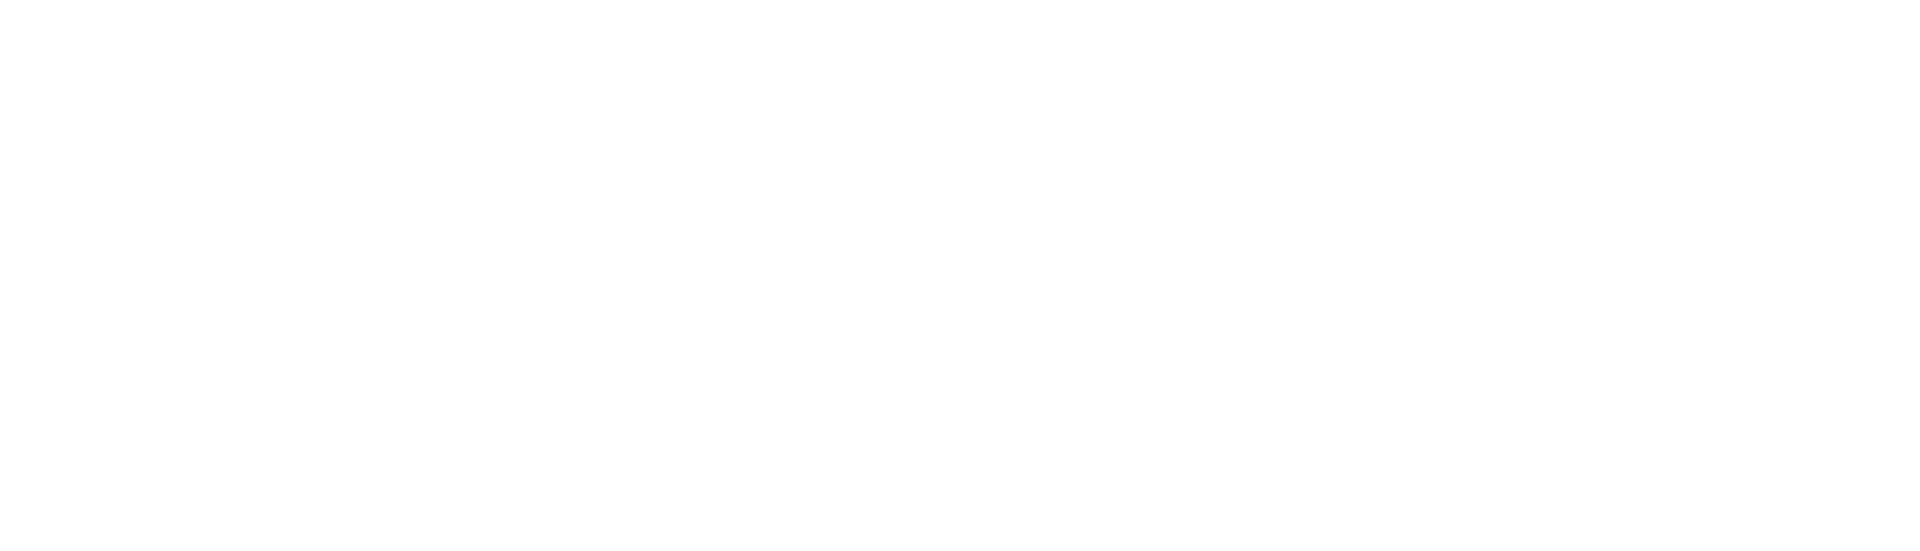 Arkansas Hospice sunrise logo